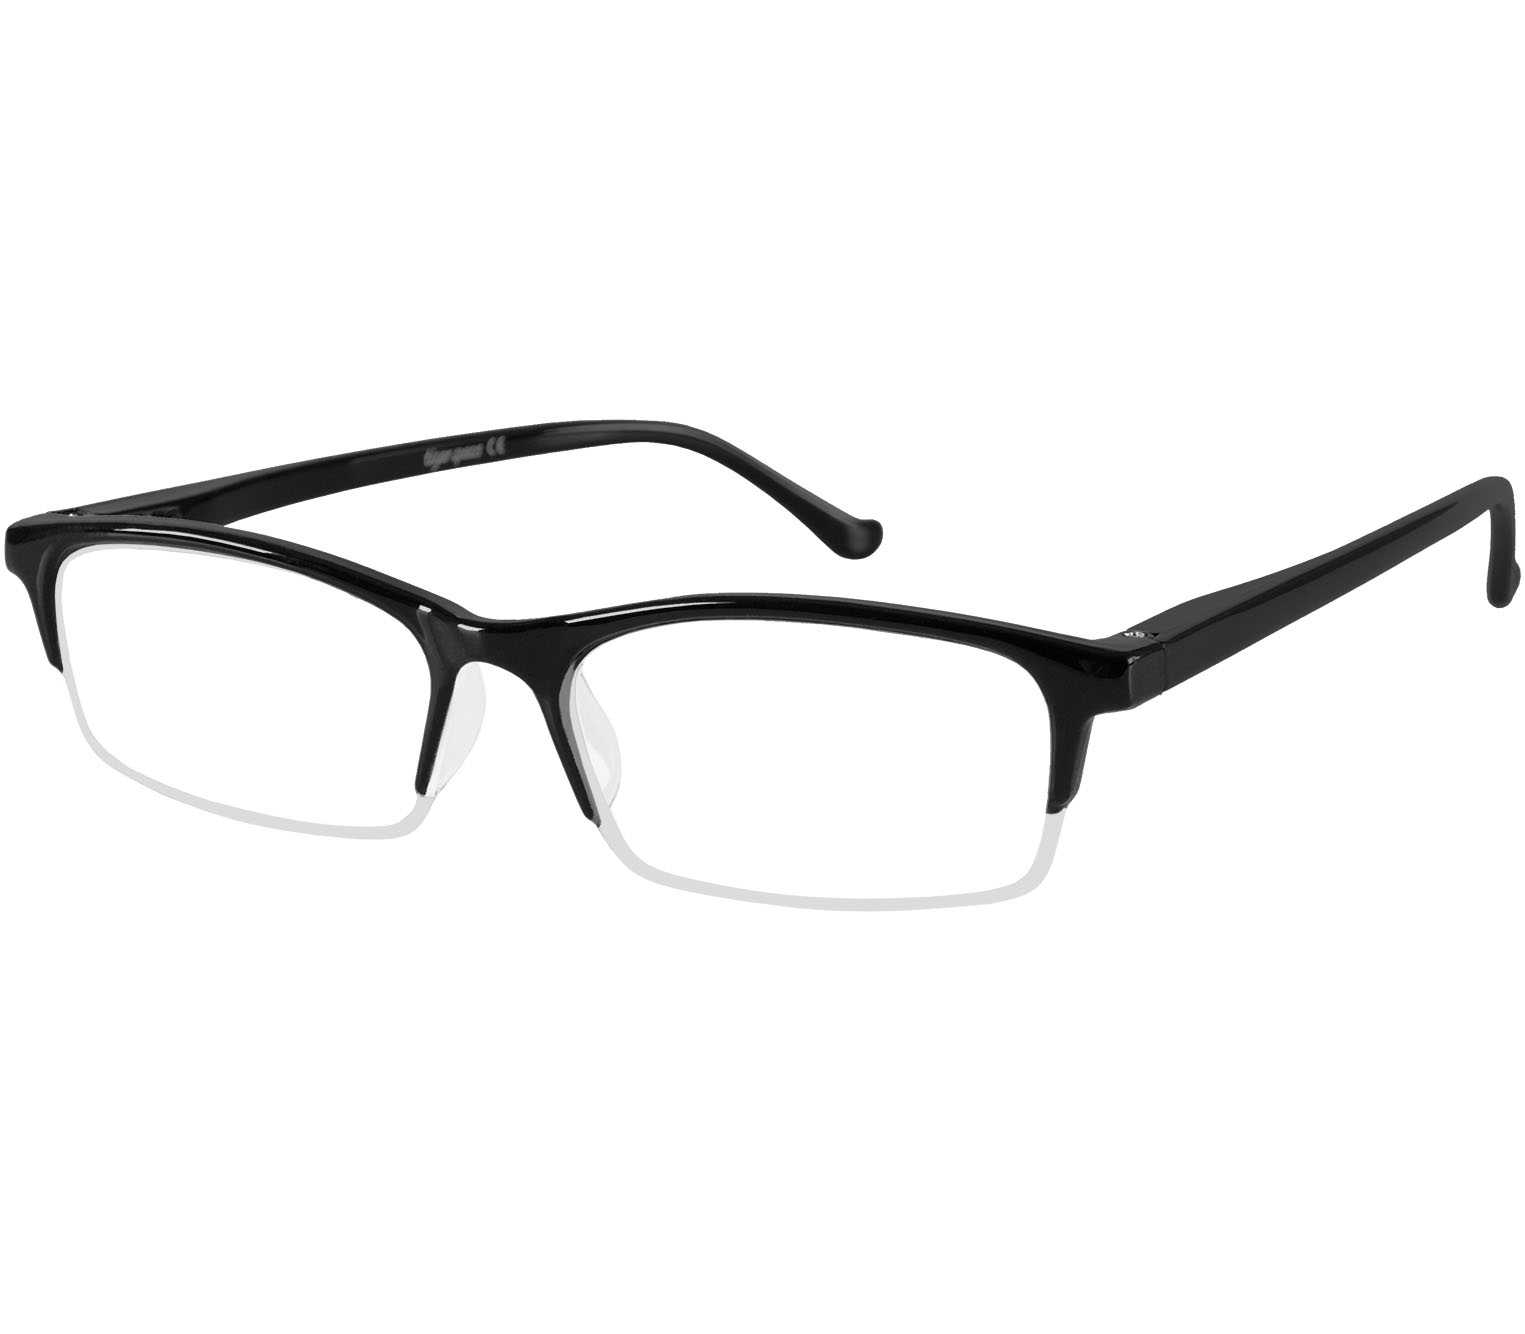 Main Image (Angle) - Yoyo (Black) Semi-rimless Reading Glasses